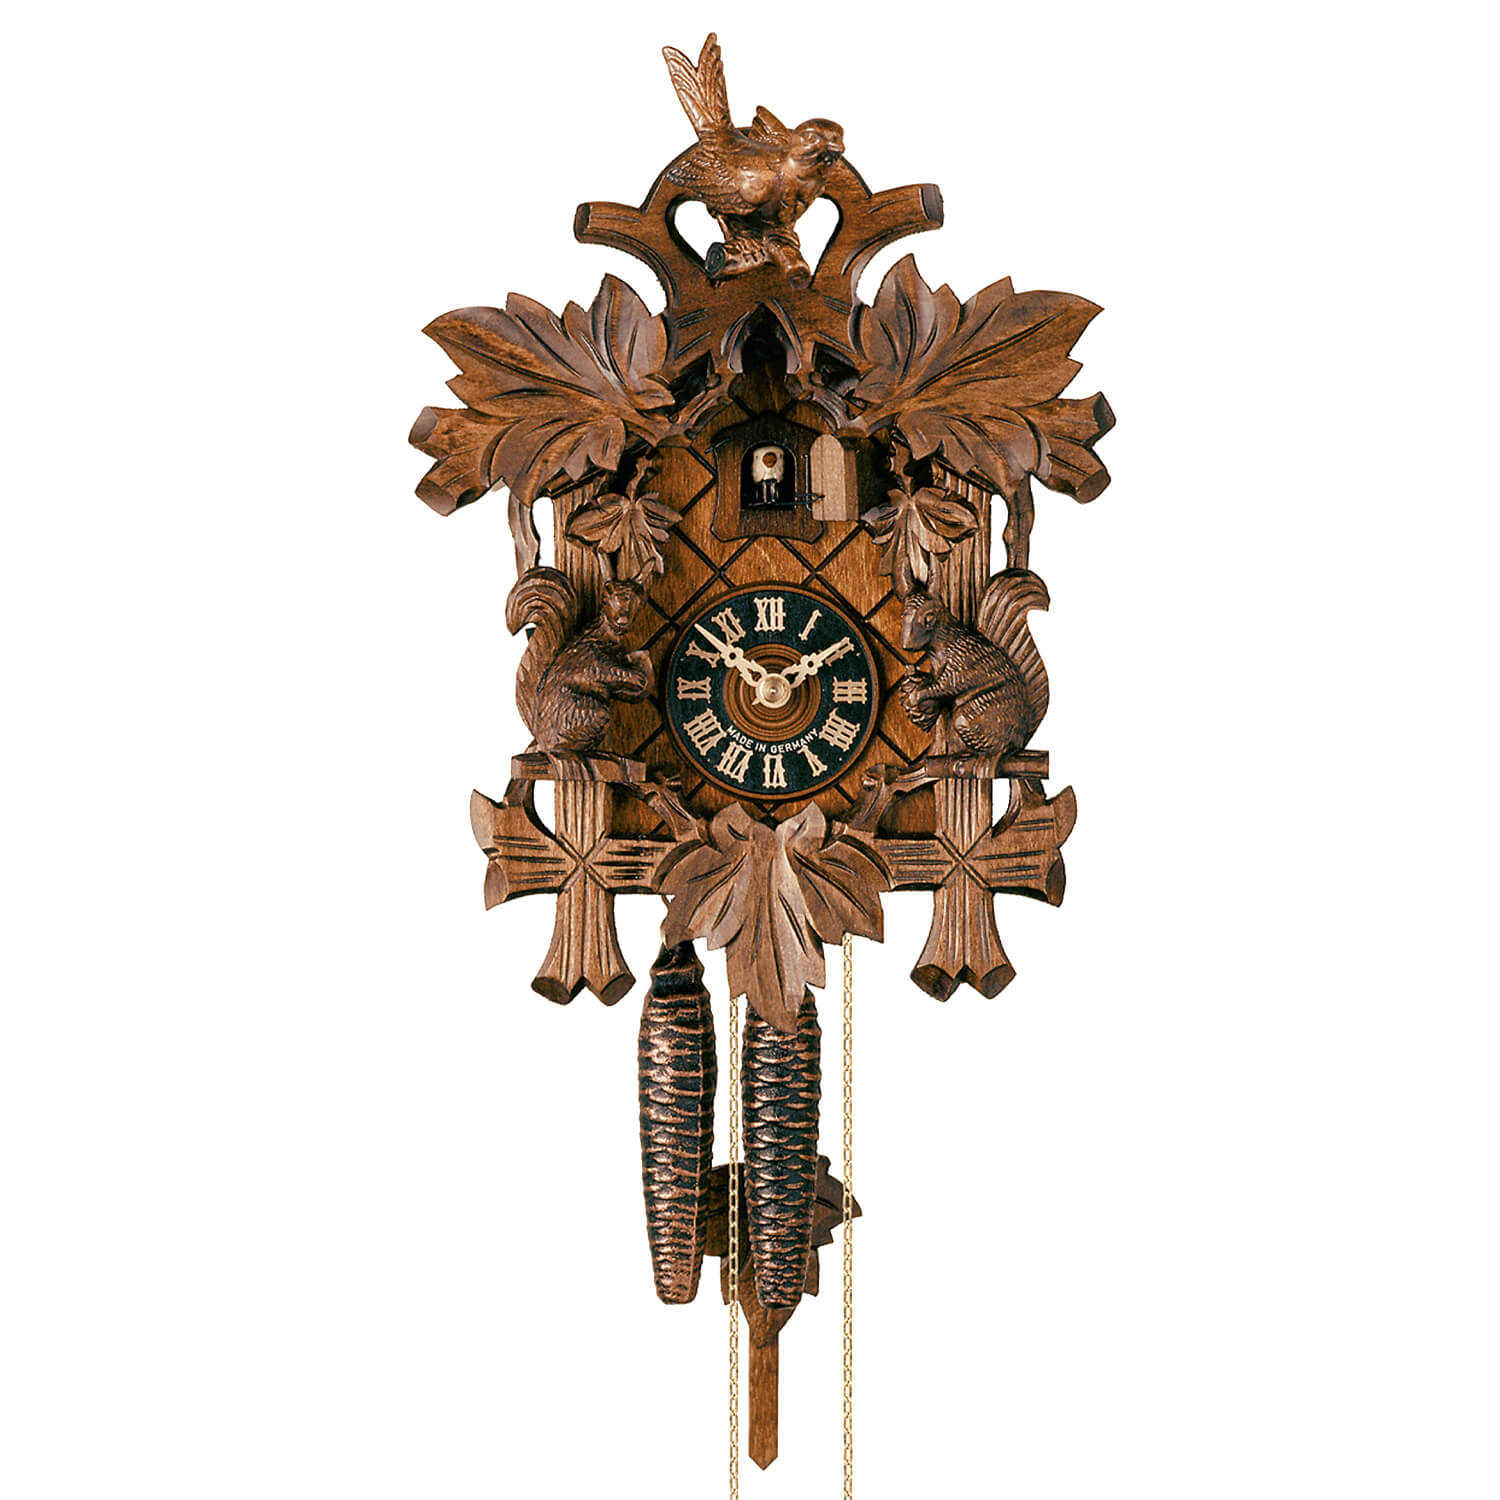 Cuckoo Clock - 1-Day Traditional With Squirrels - HÖNES – Fehrenbach ...